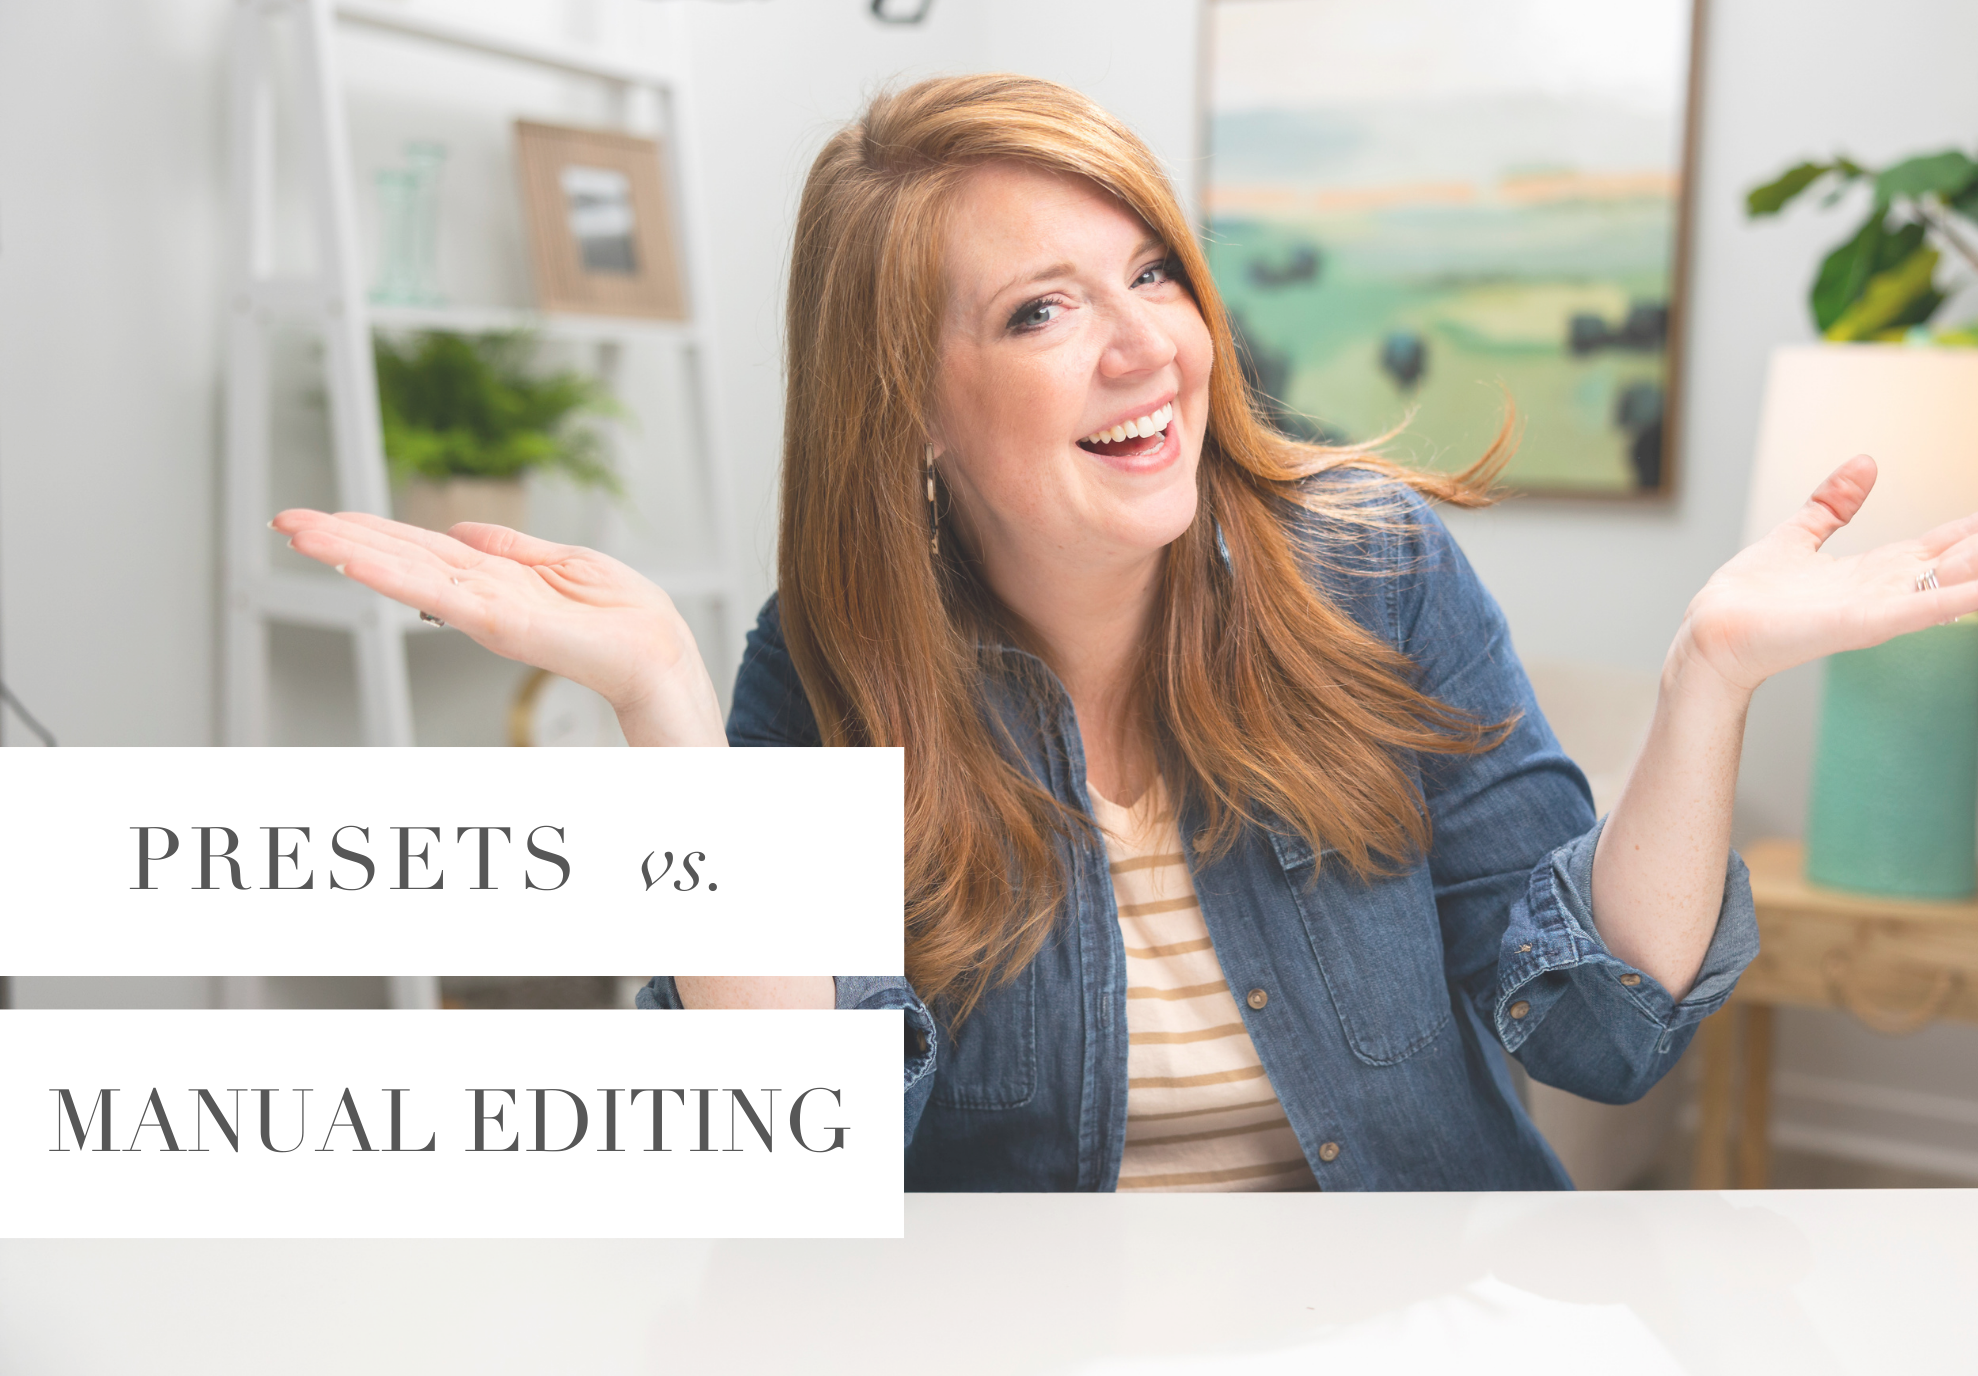 Presets vs. Manual Editing